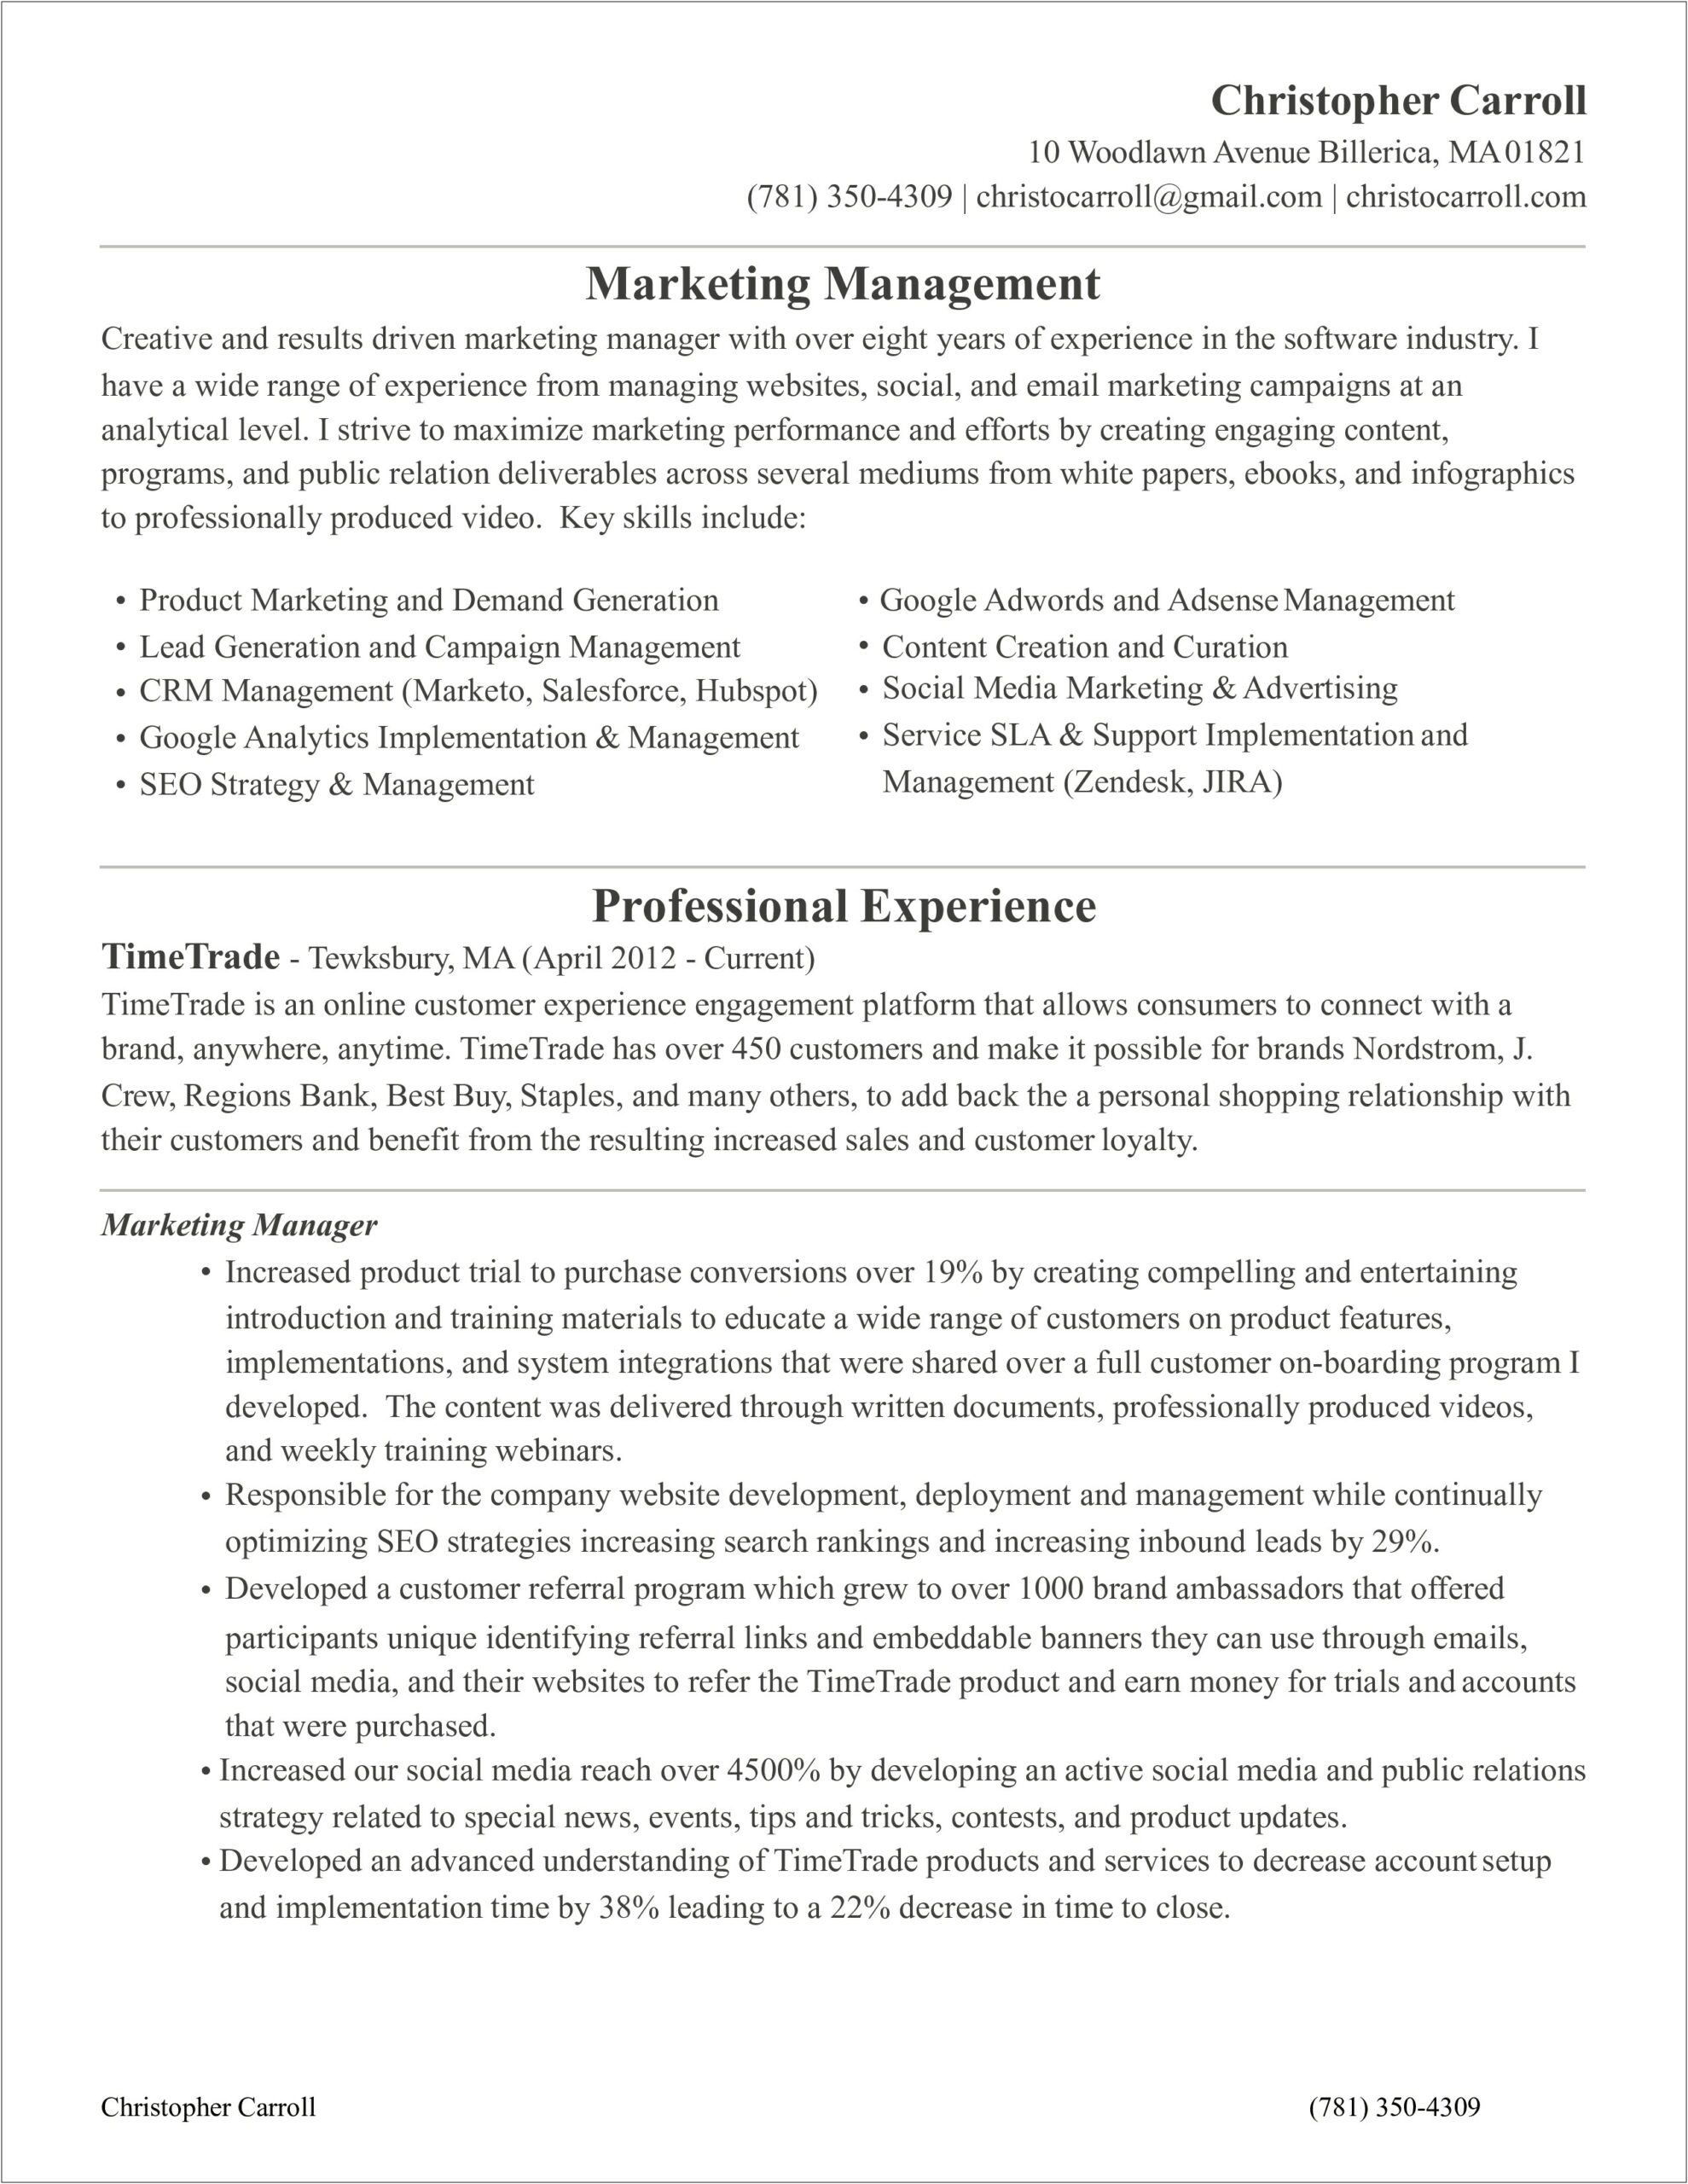 Marketing Manager Skills To Put On Resume